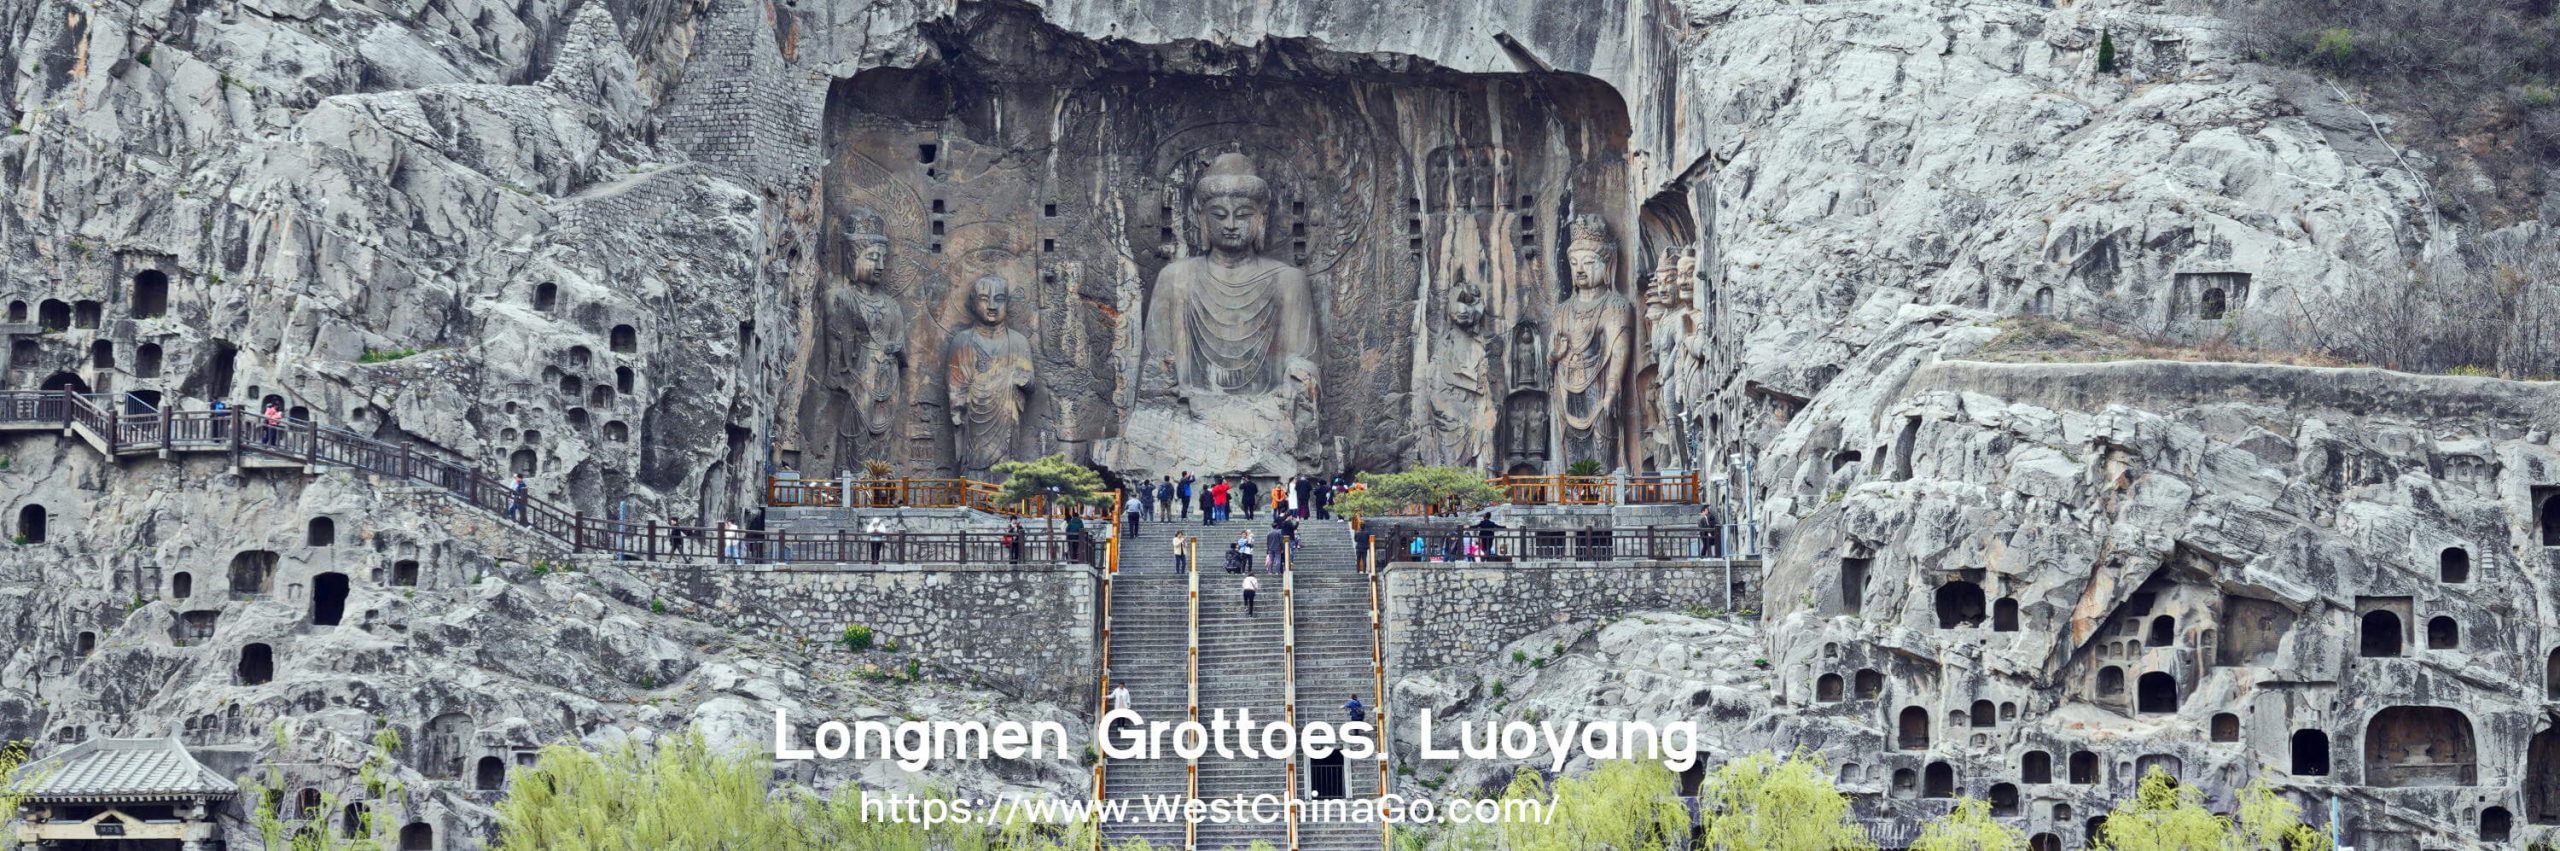 Longmen Grottoes. Luoyang